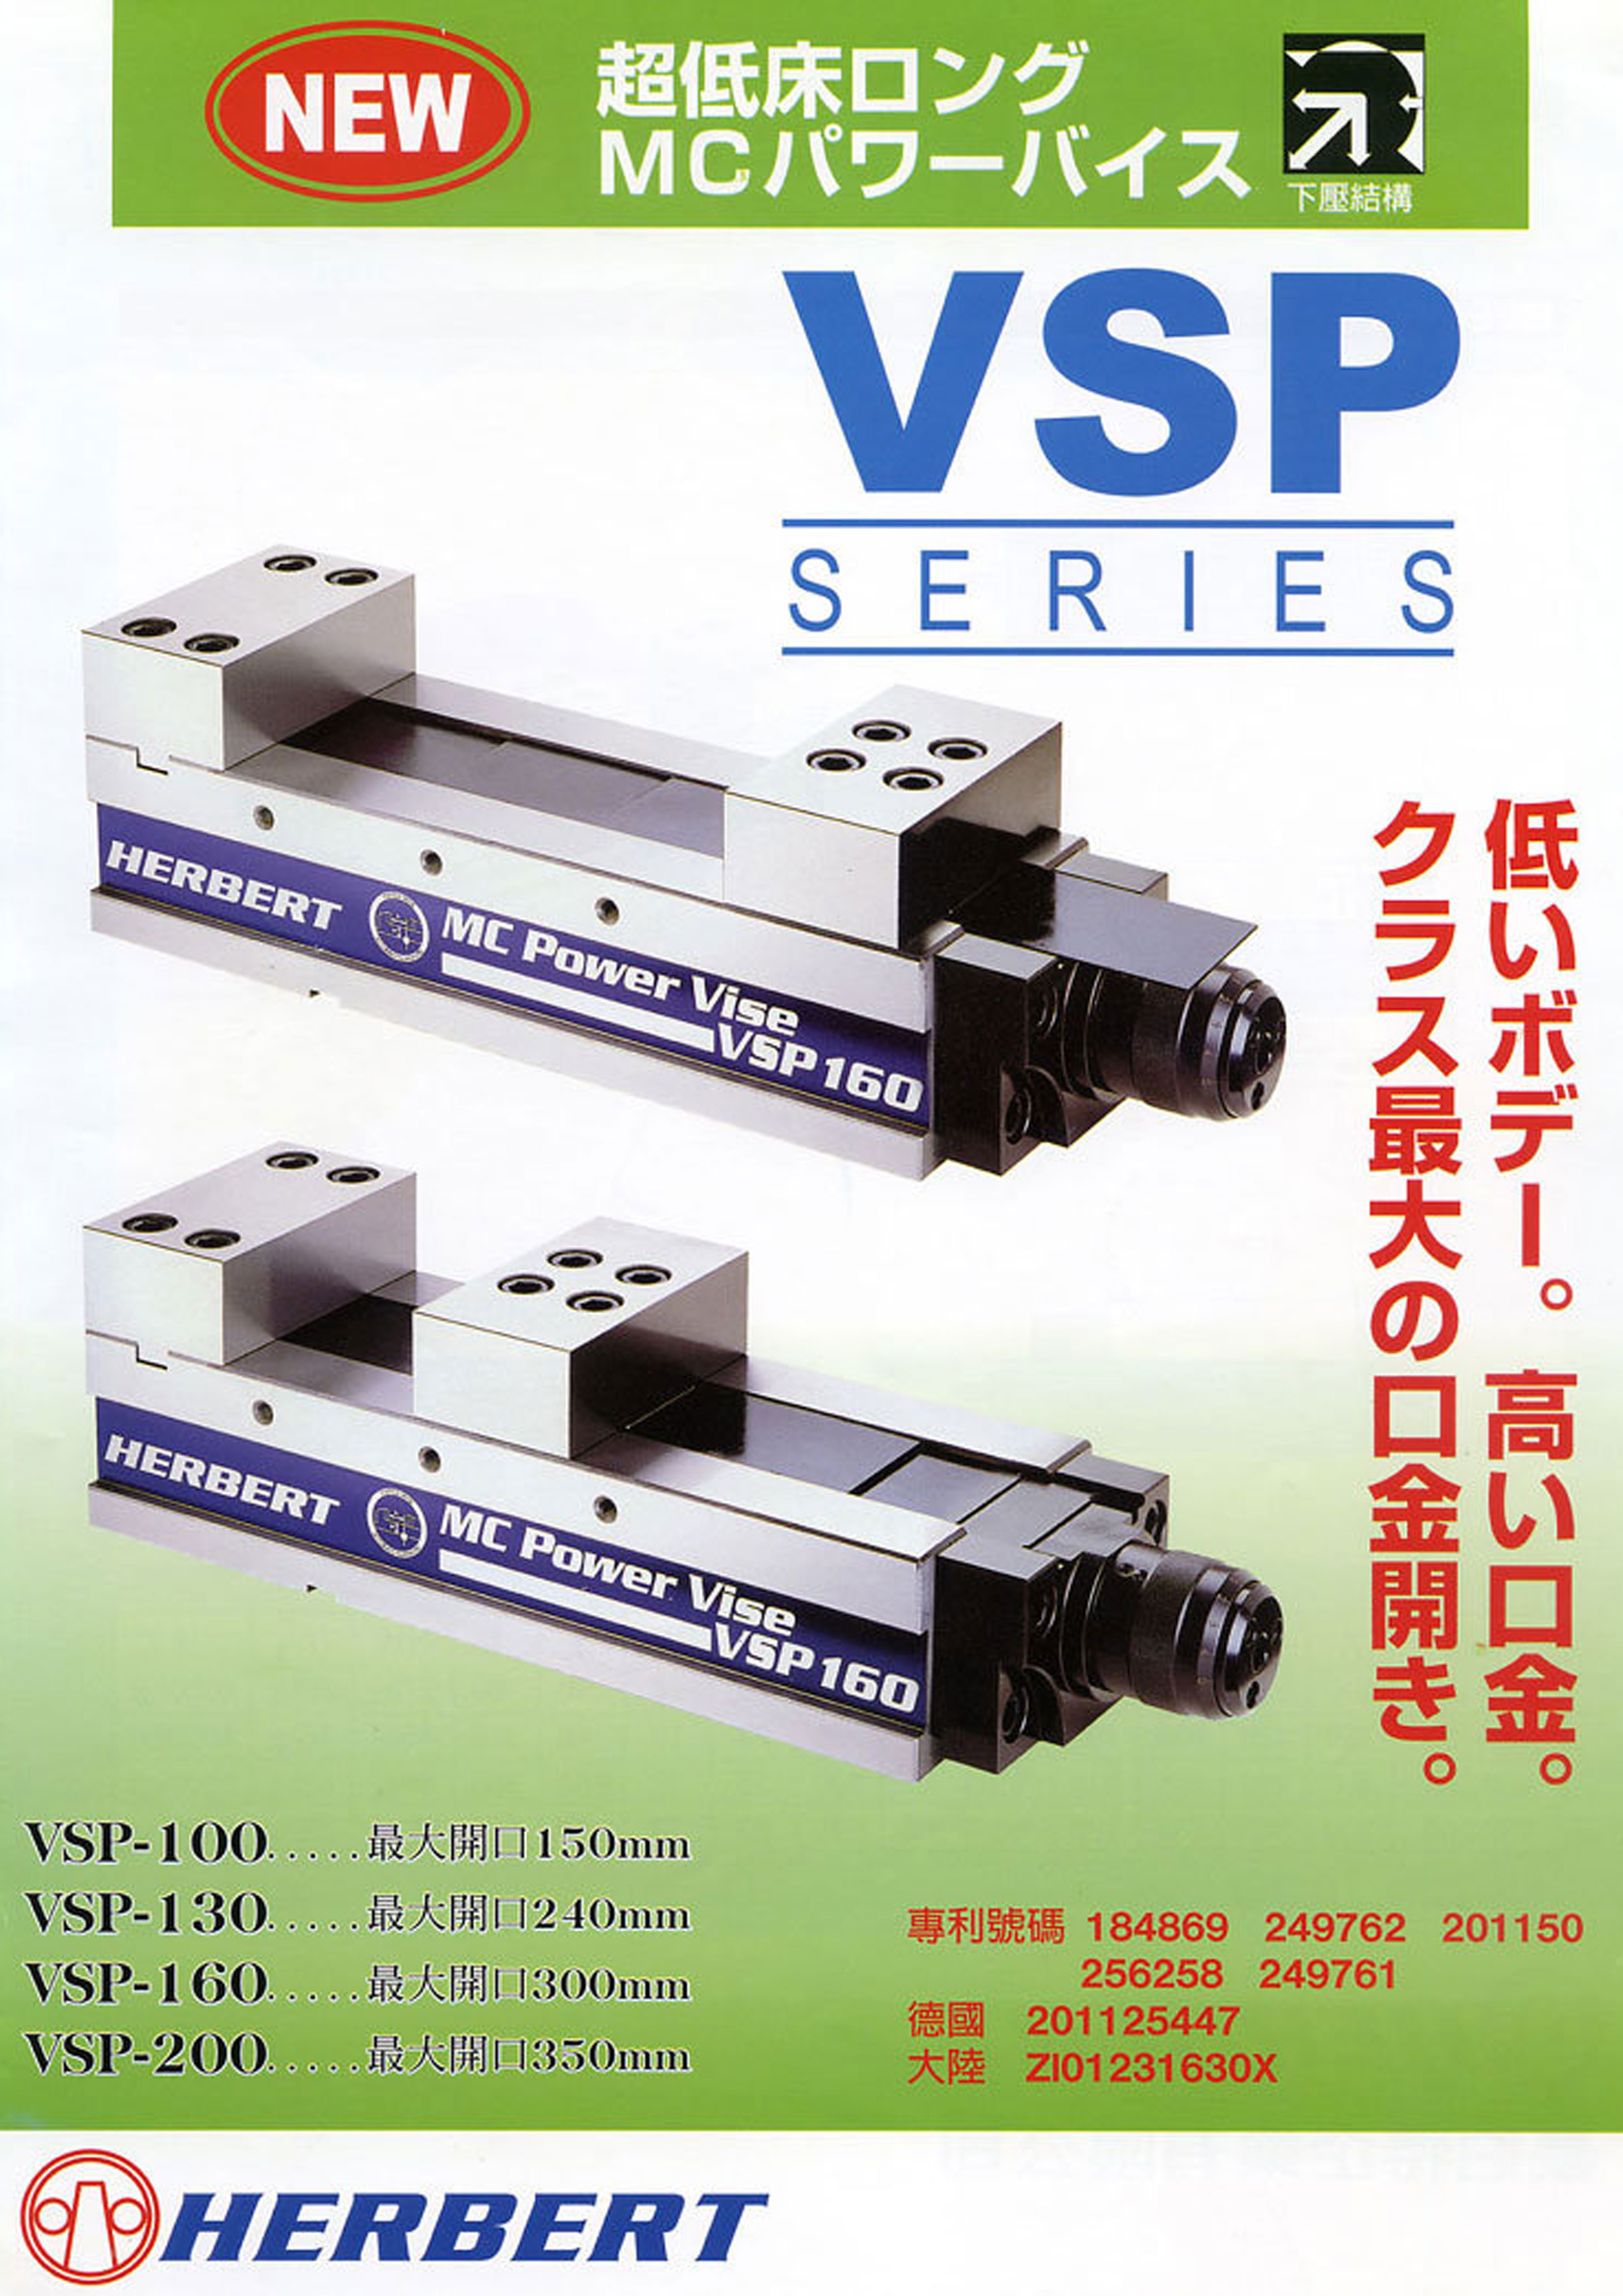 MC Precision Vice VSP Series (Japanese)